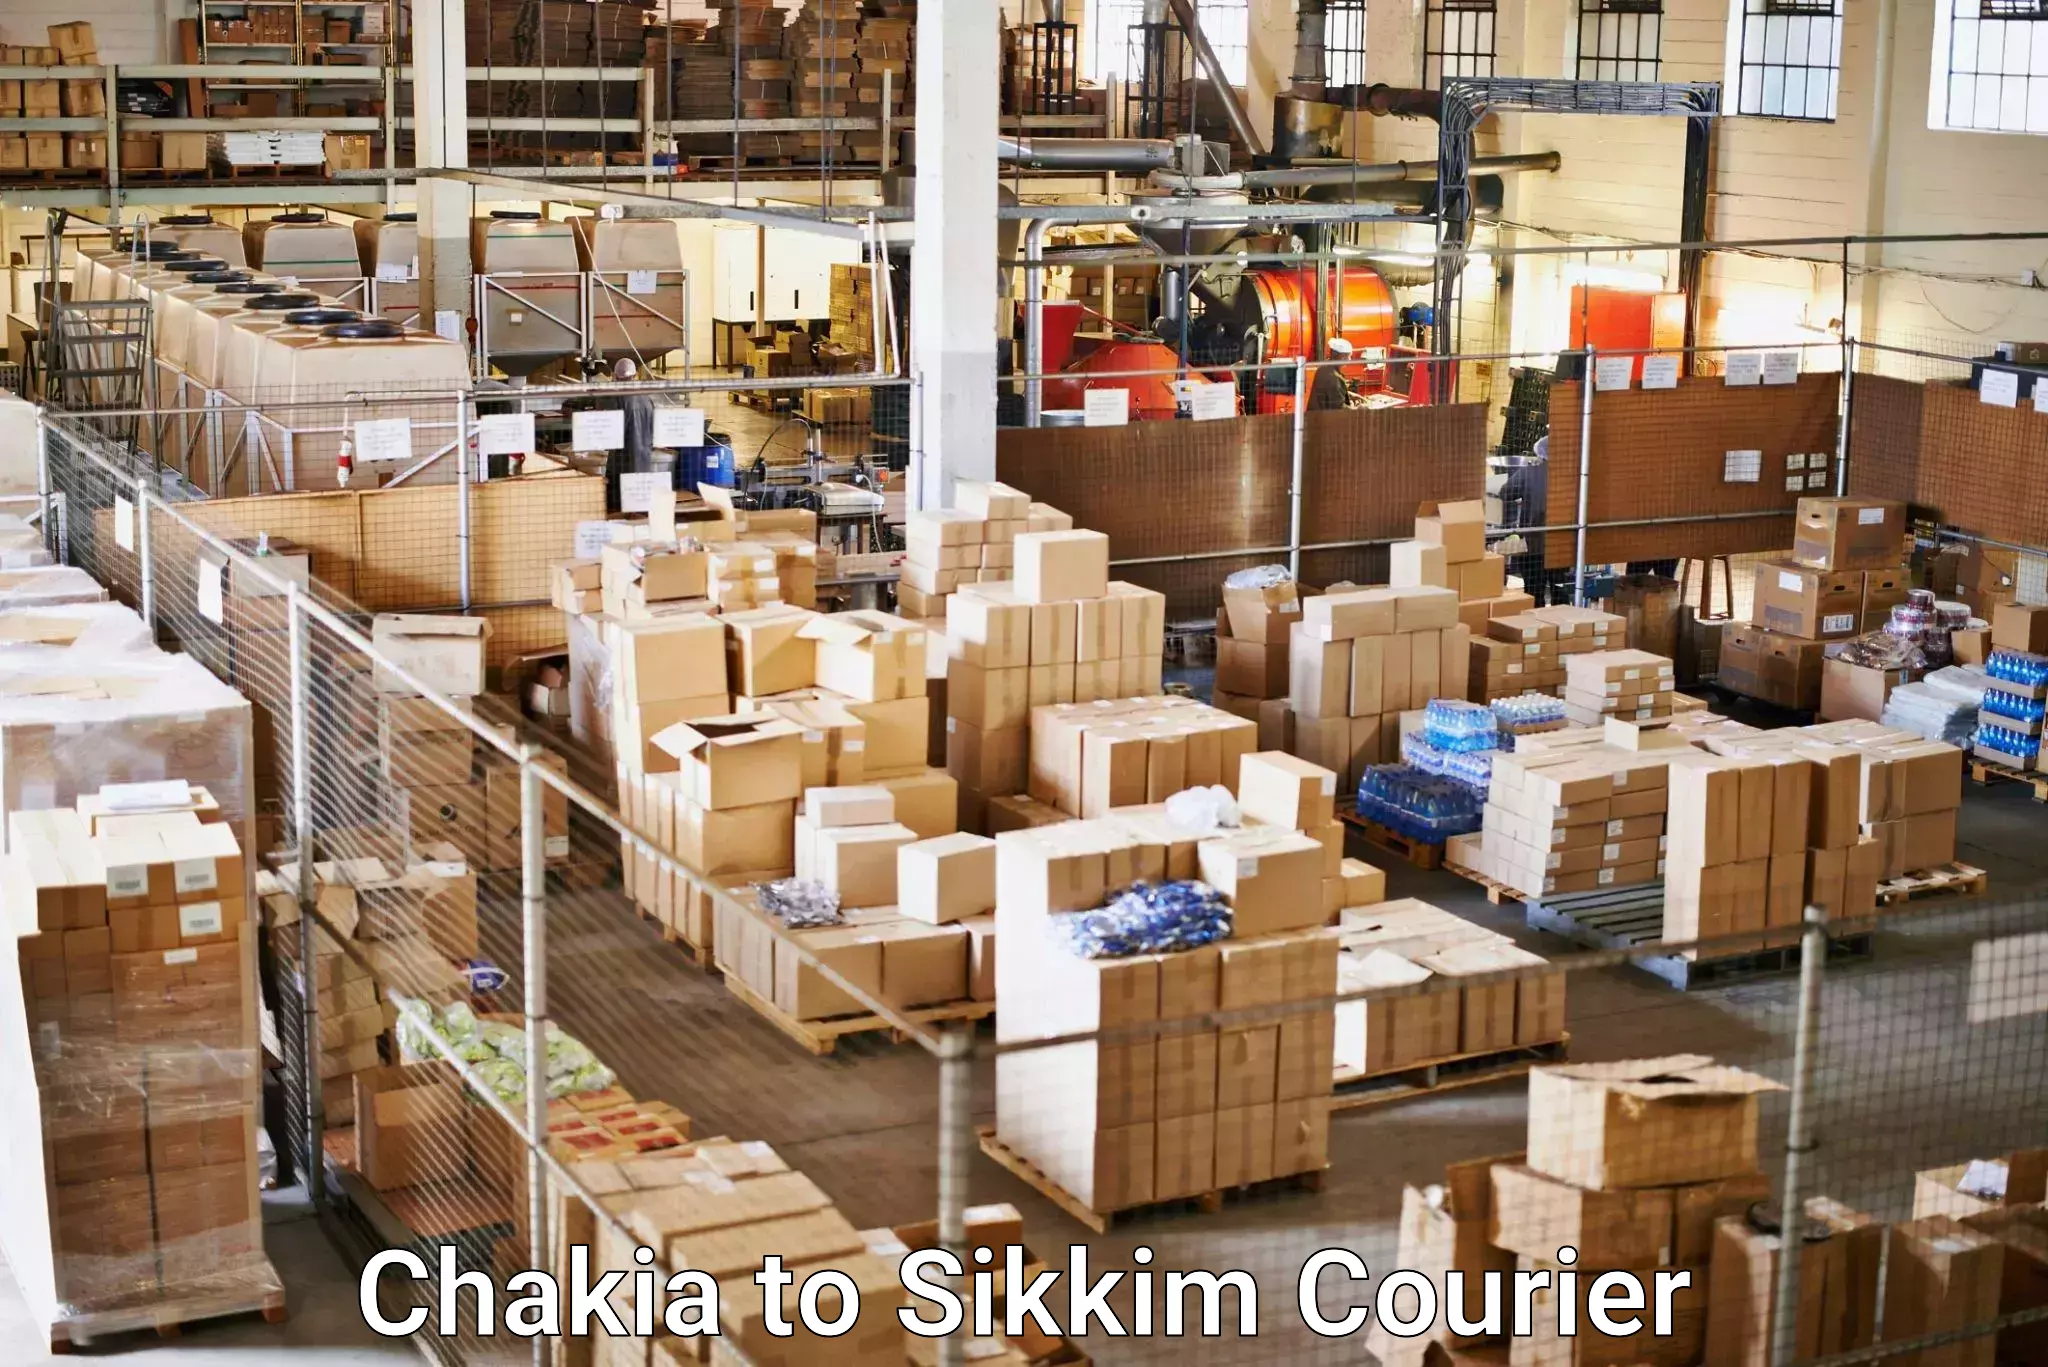 Courier service comparison Chakia to Mangan